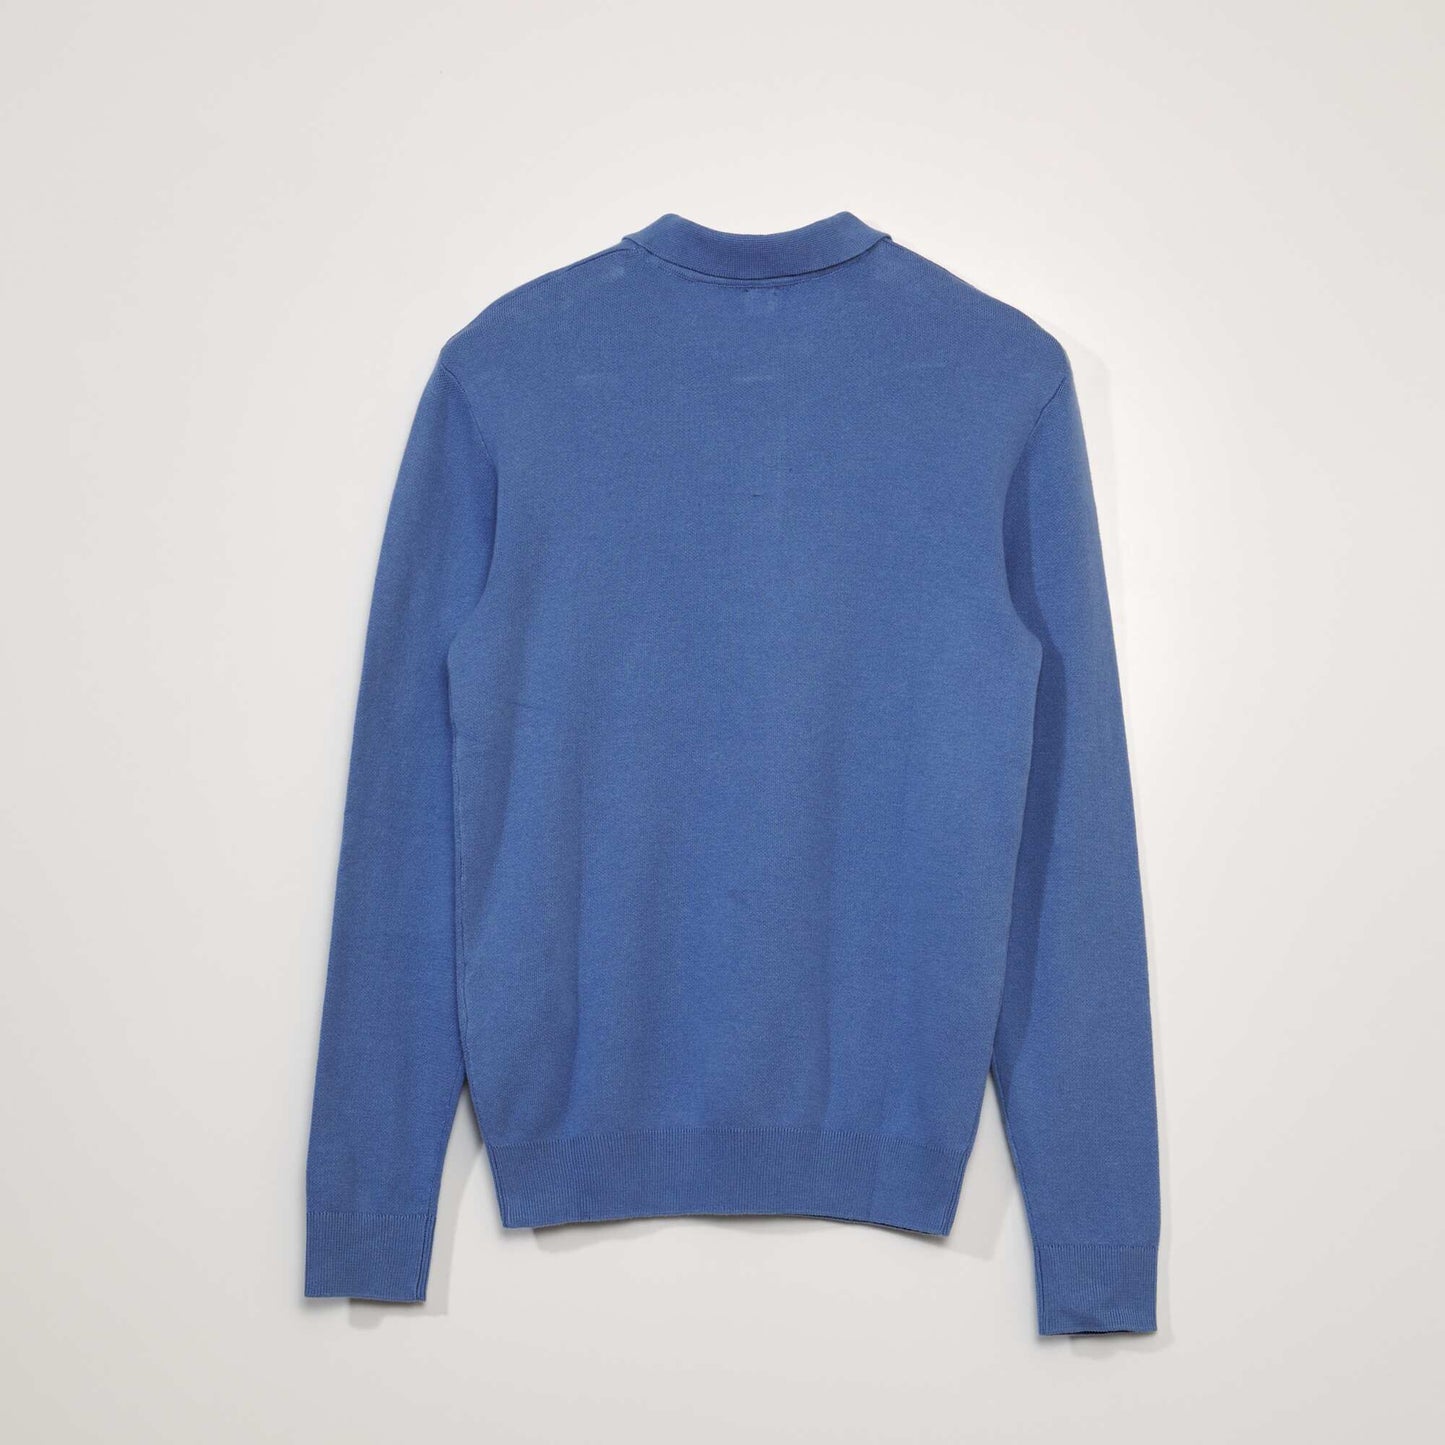 Sweatshirt fabric polo shirt ENGLISH BLUE